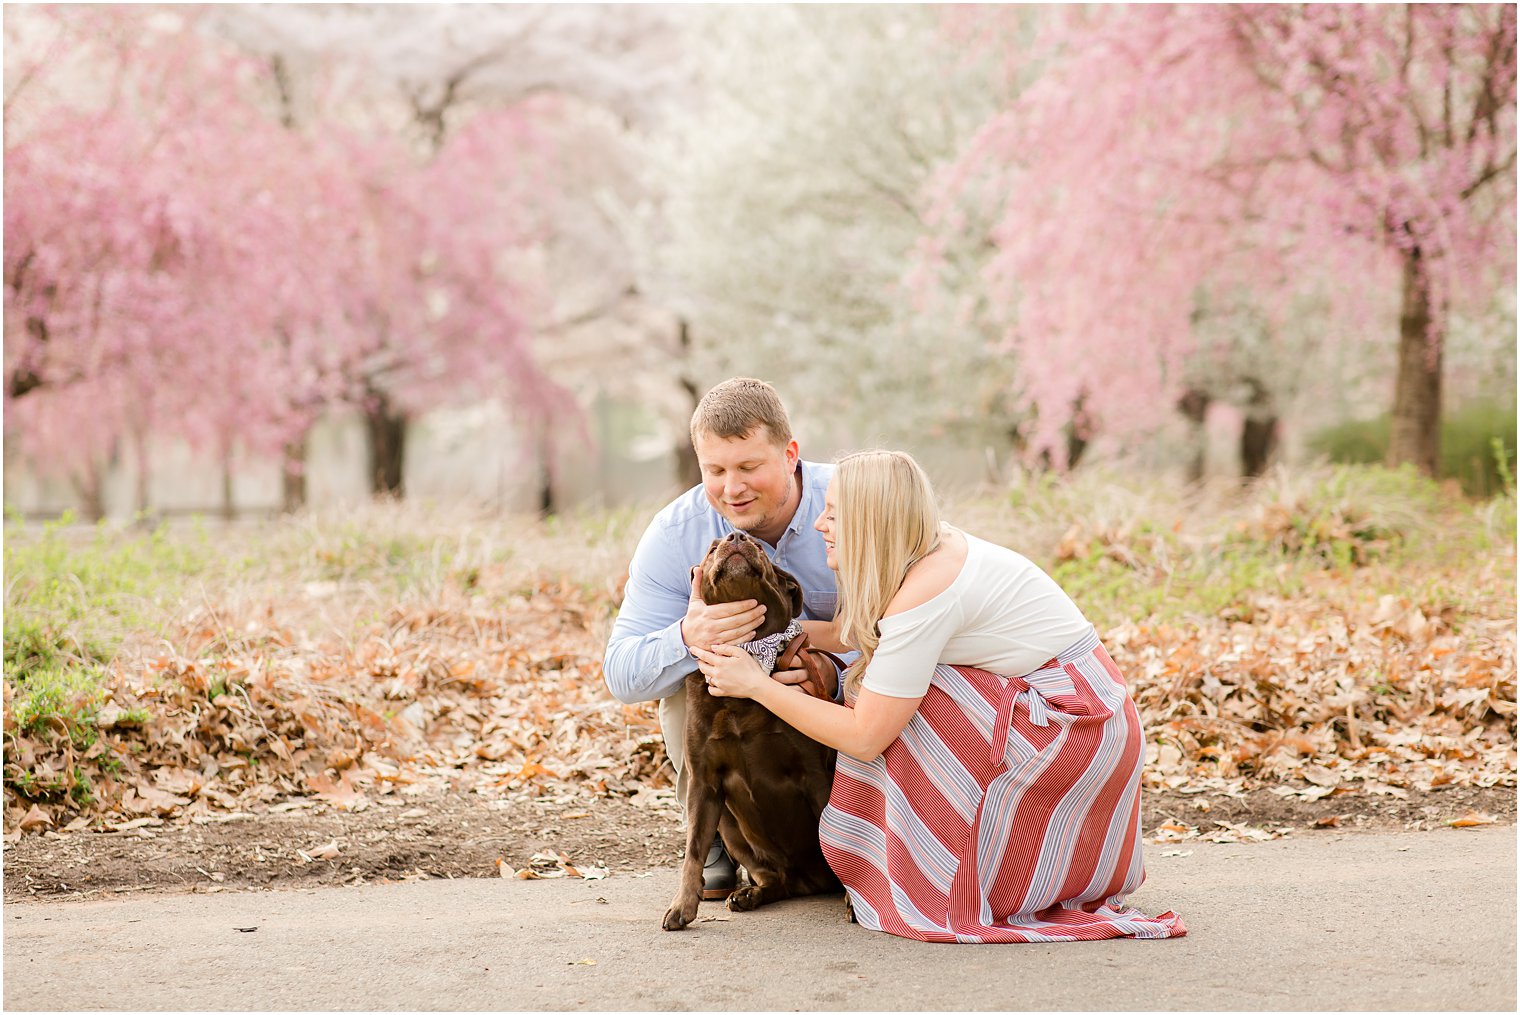 Engagement session with dog by Idalia Photography